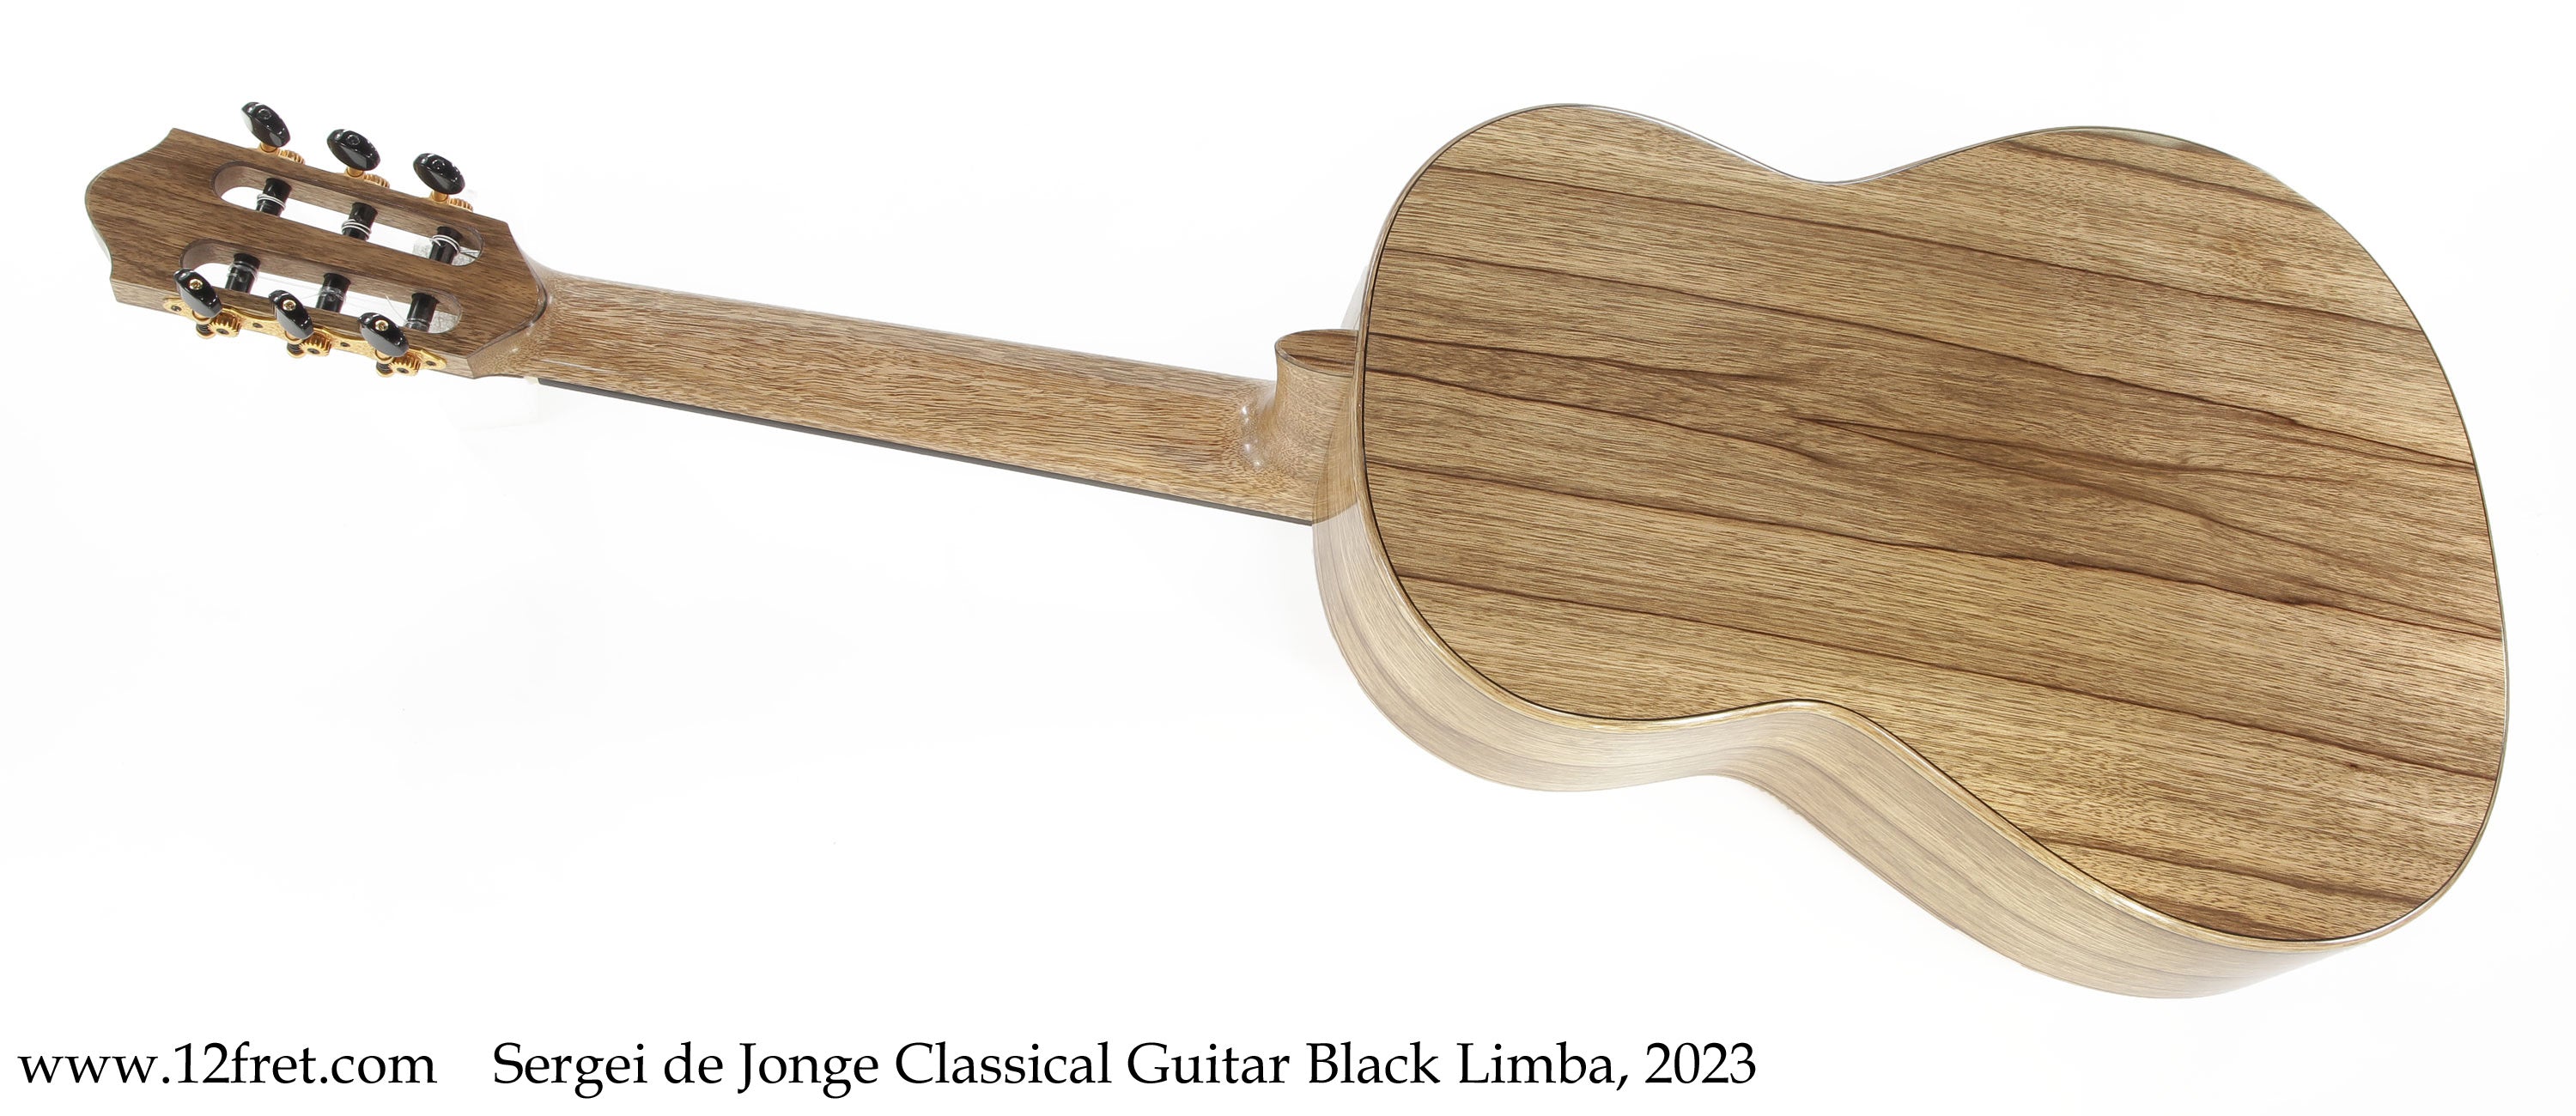 Sergei de Jonge Classical Guitar Black Limba, 2023 - The Twelfth Fret